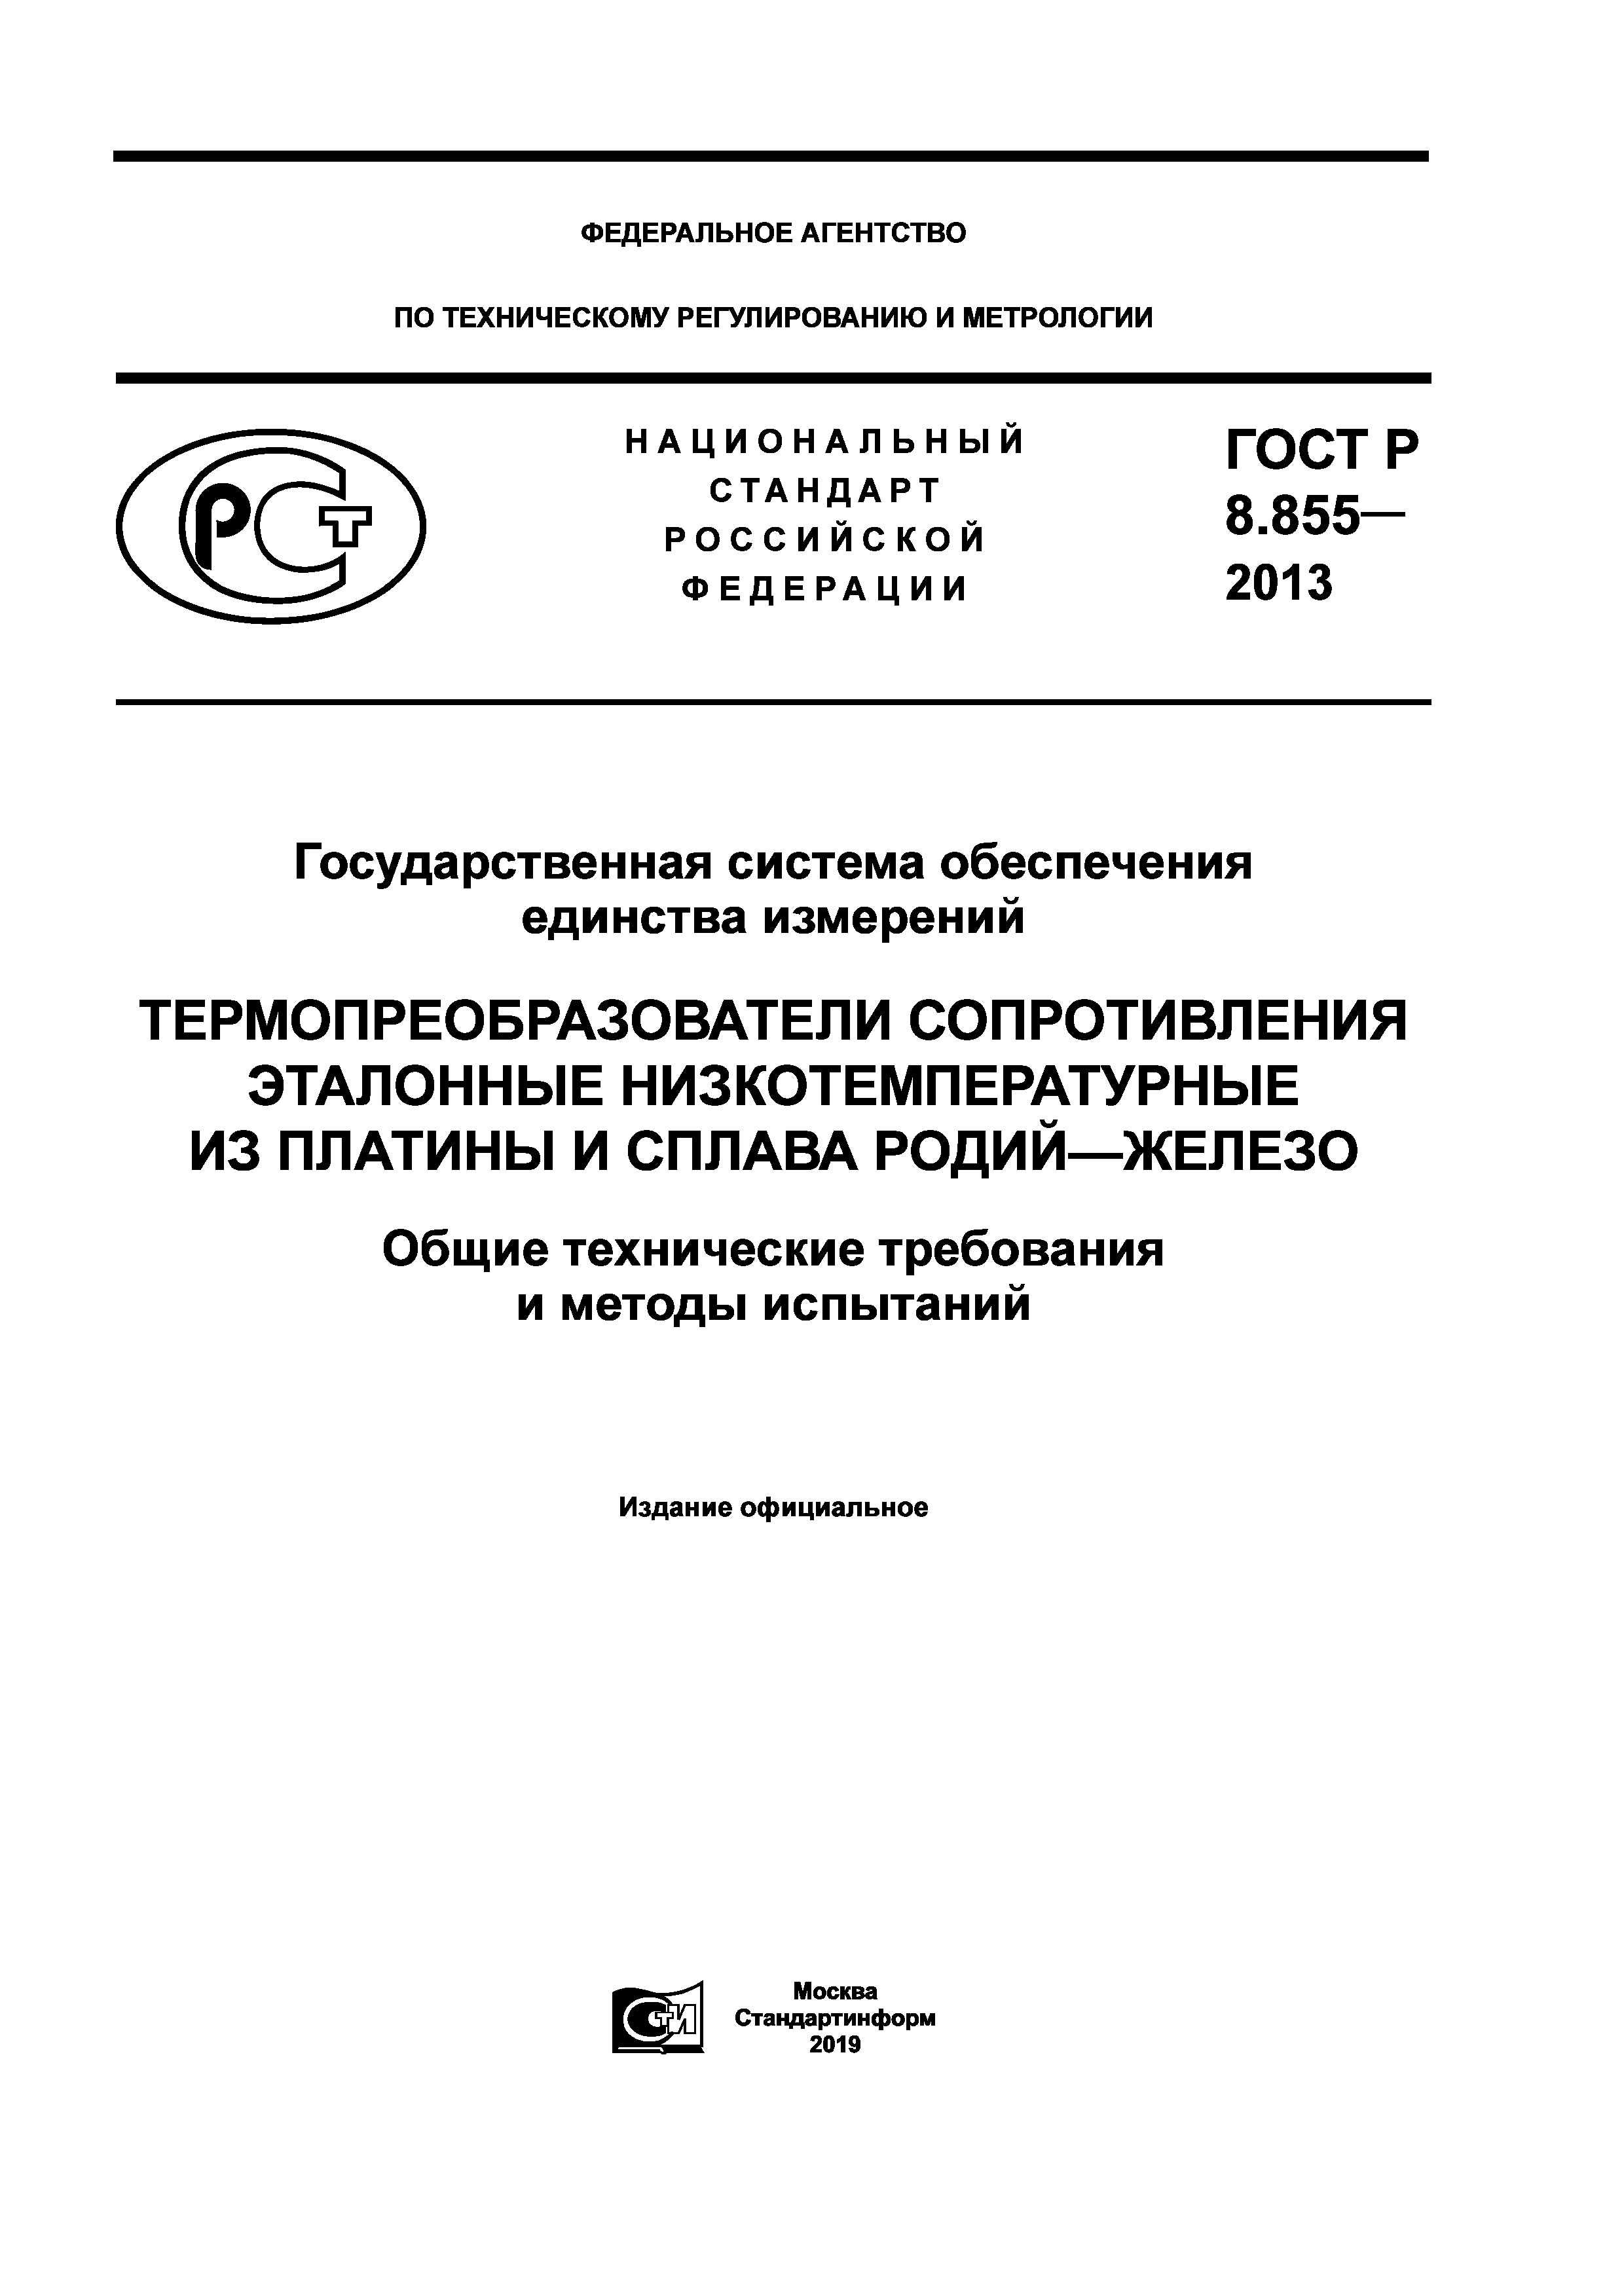 ГОСТ Р 8.855-2013